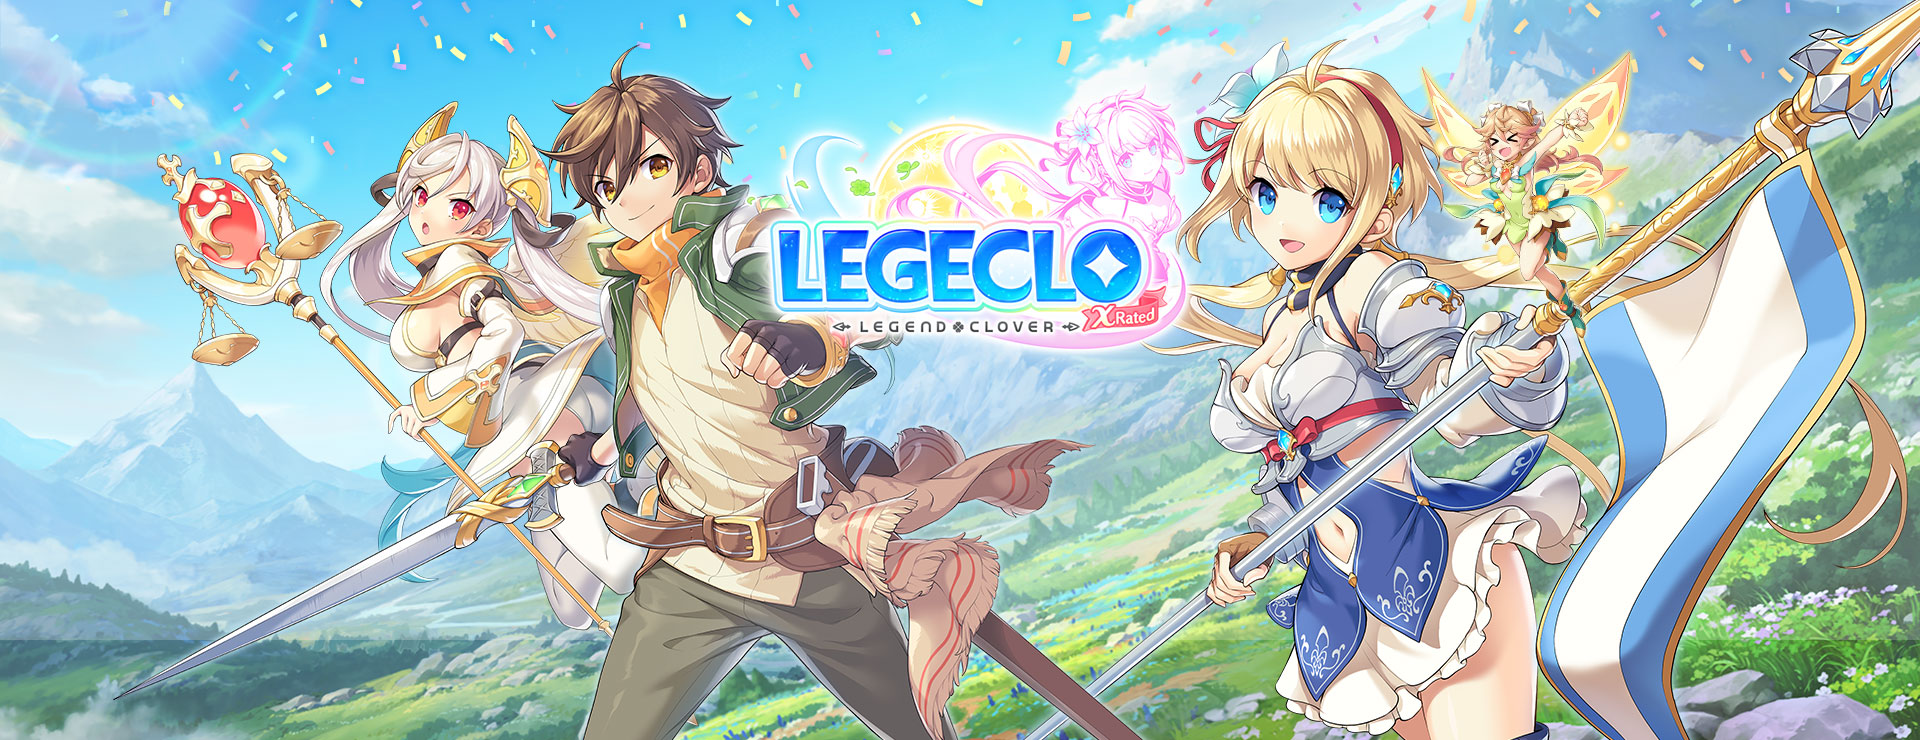 Legeclo: Legend Clover X Rated - Turn Based RPG Game